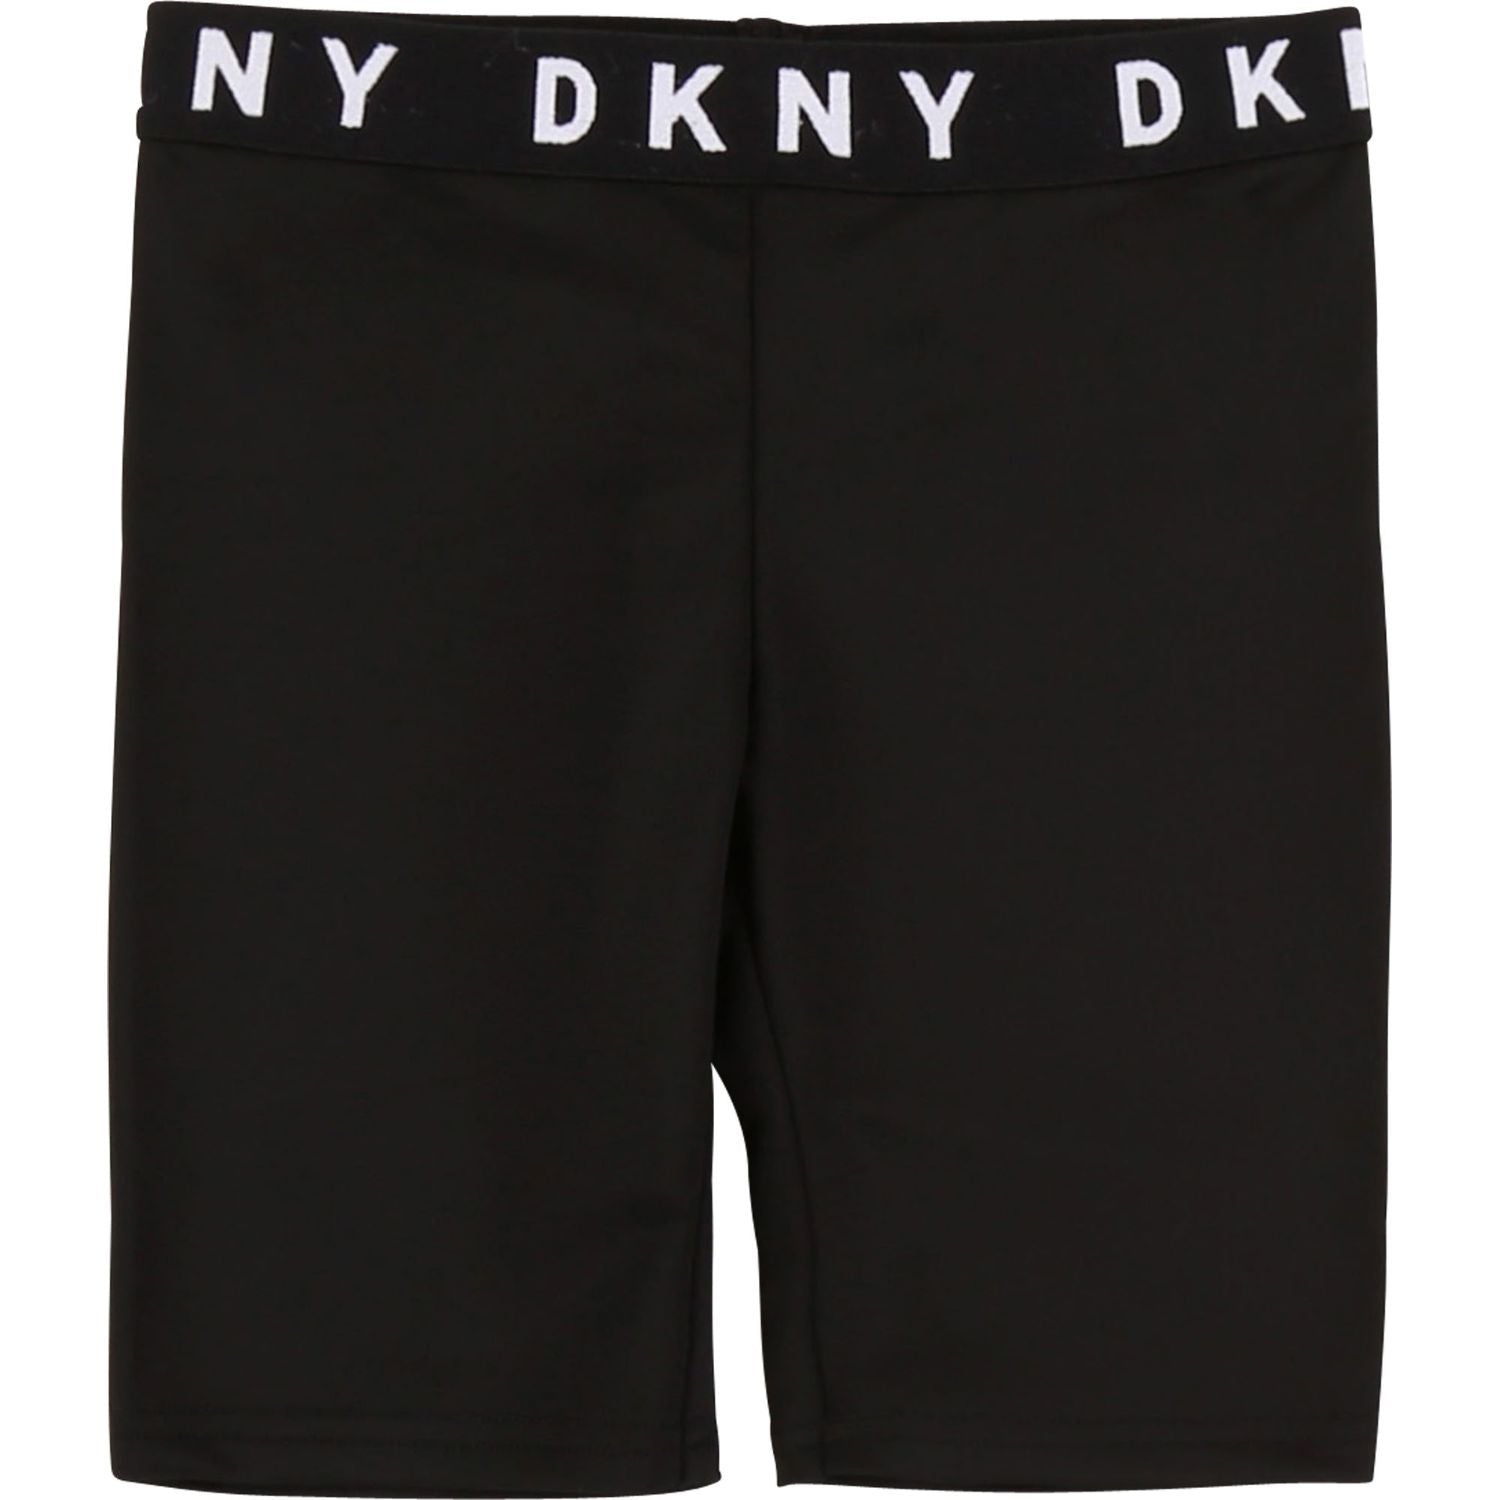 DKNY CYCLE SHORTS D34985 09B